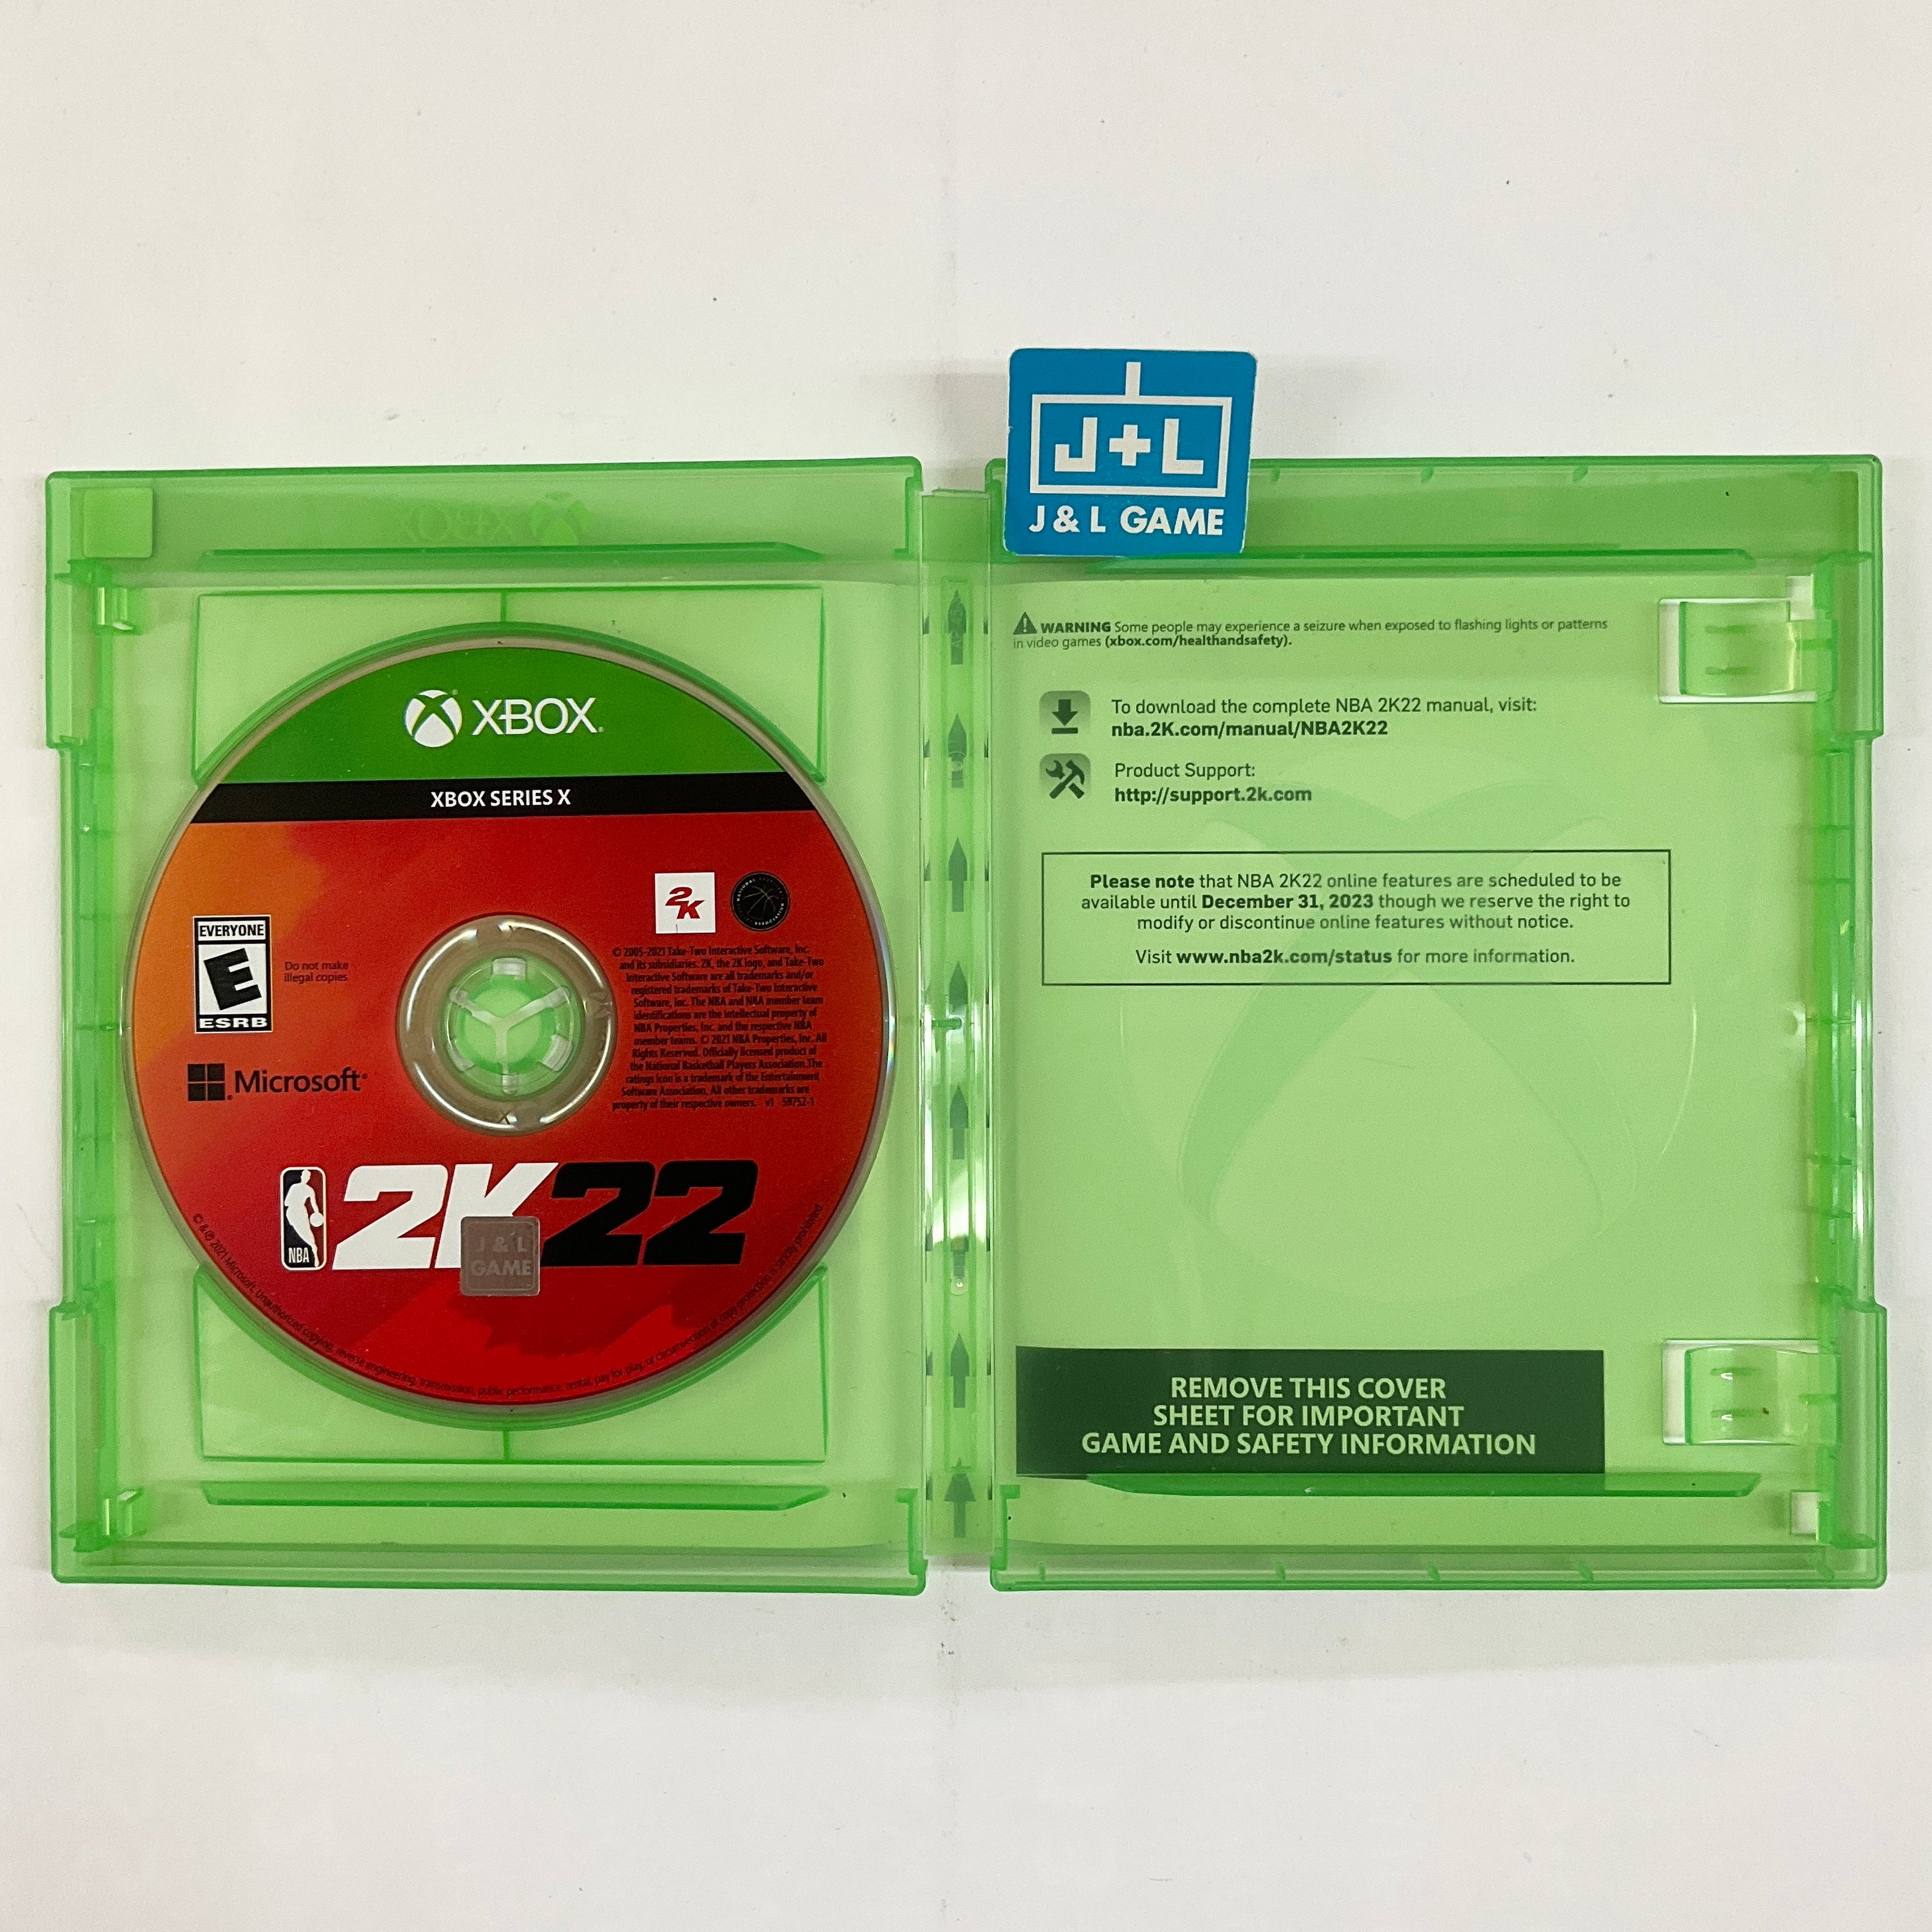 NBA 2K22 - (XSX) Xbox Series X [Pre-Owned] Video Games 2K   